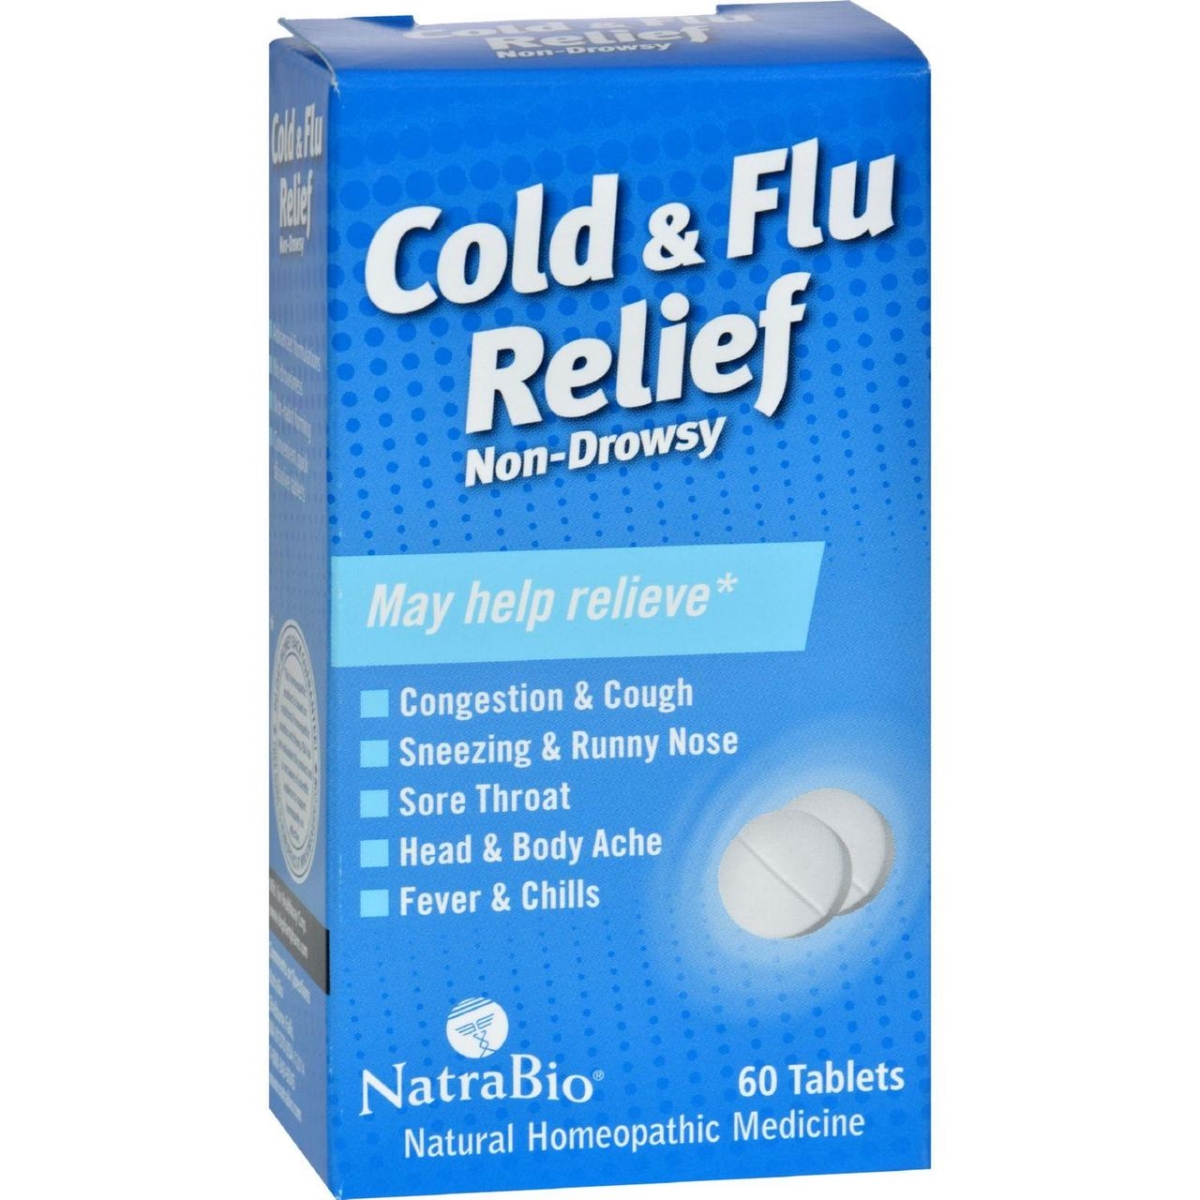 Natrabio Hg0737494 Cold & Flu Relief Non-drowsy - 60 Tablets